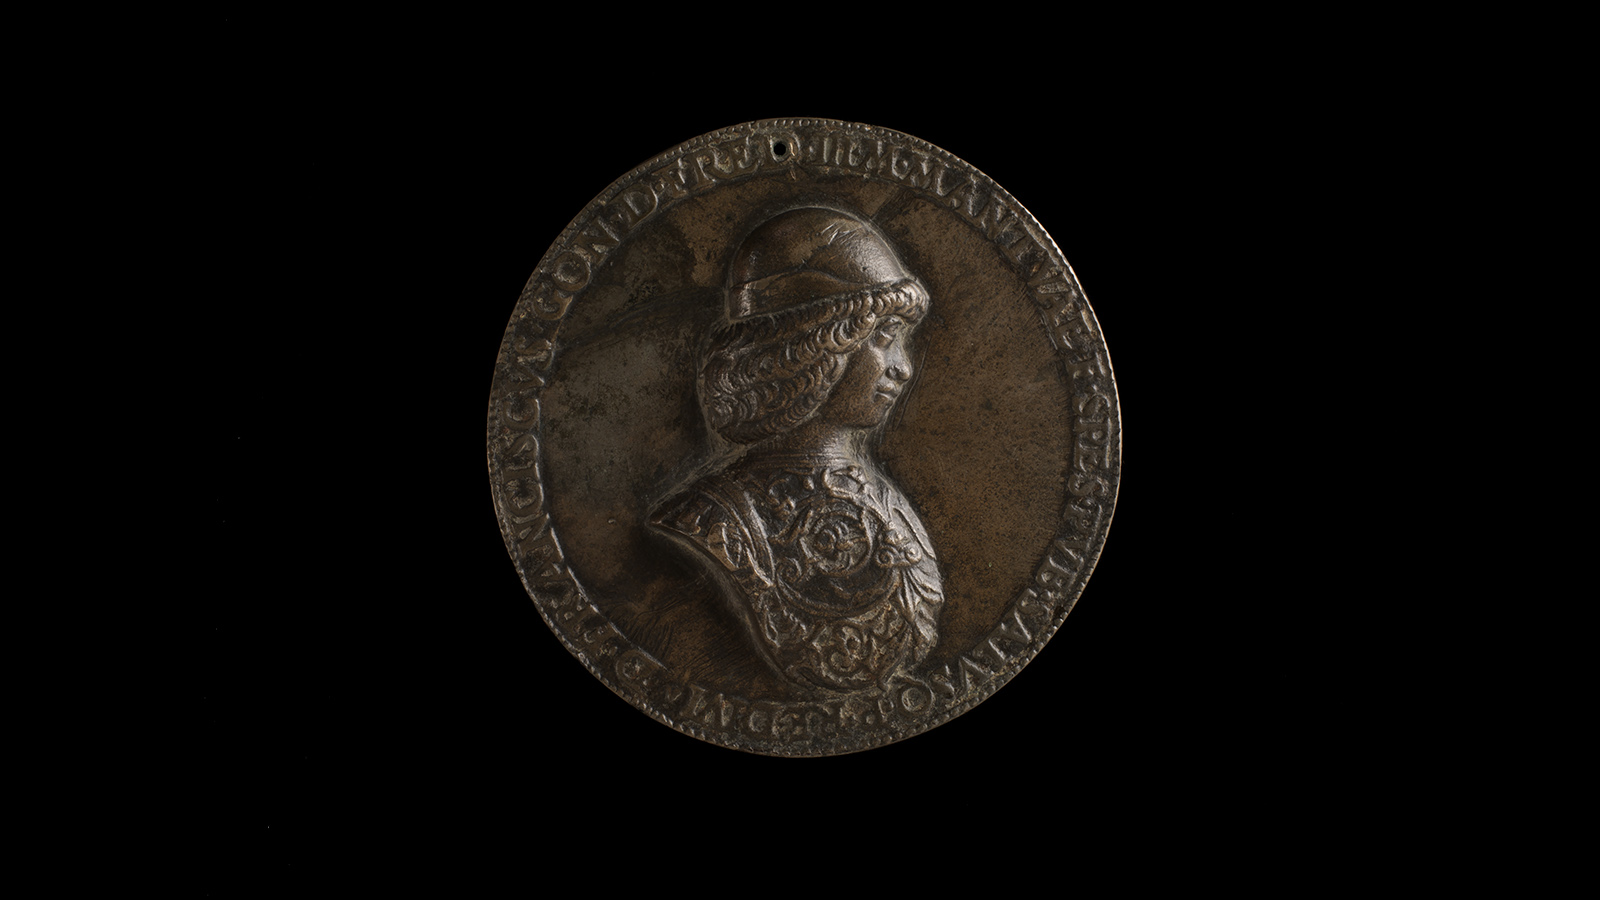 Bartolommeo Melioli. Anverso: Francesco II Gonzaga, 4.º marquês de Mântua. Mântua, 1481 ou 1484. Bronze. Museu Calouste Gulbenkian